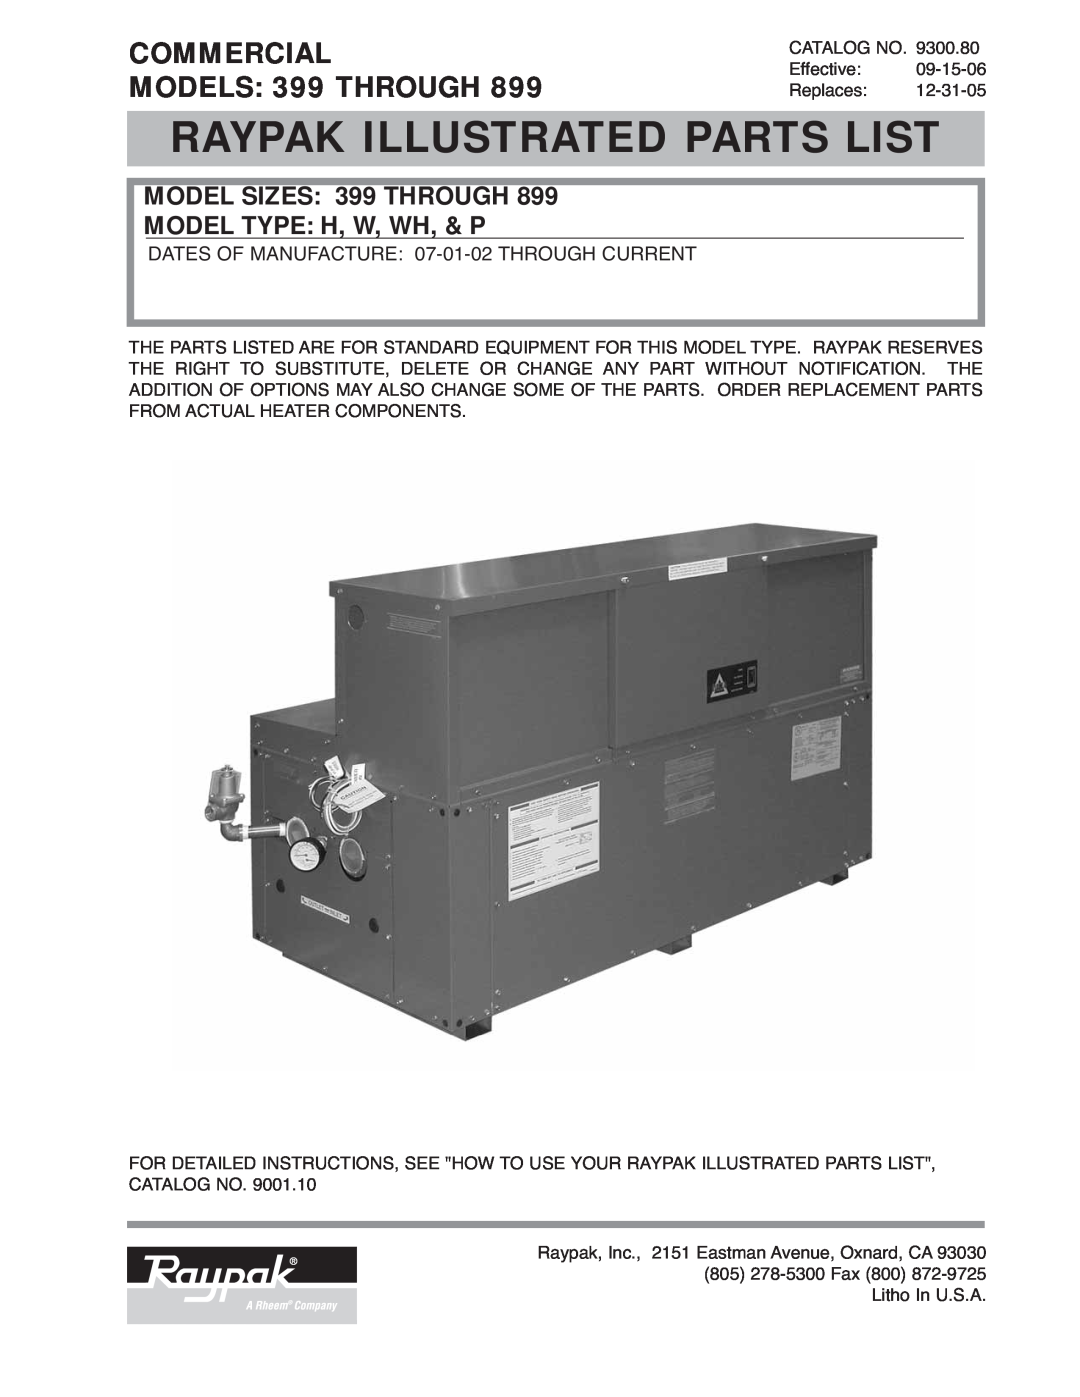 Raypak 899 manual MODEL SIZES 399 THROUGH, Model Type H, W, Wh, & P, Raypak Illustrated Parts List 